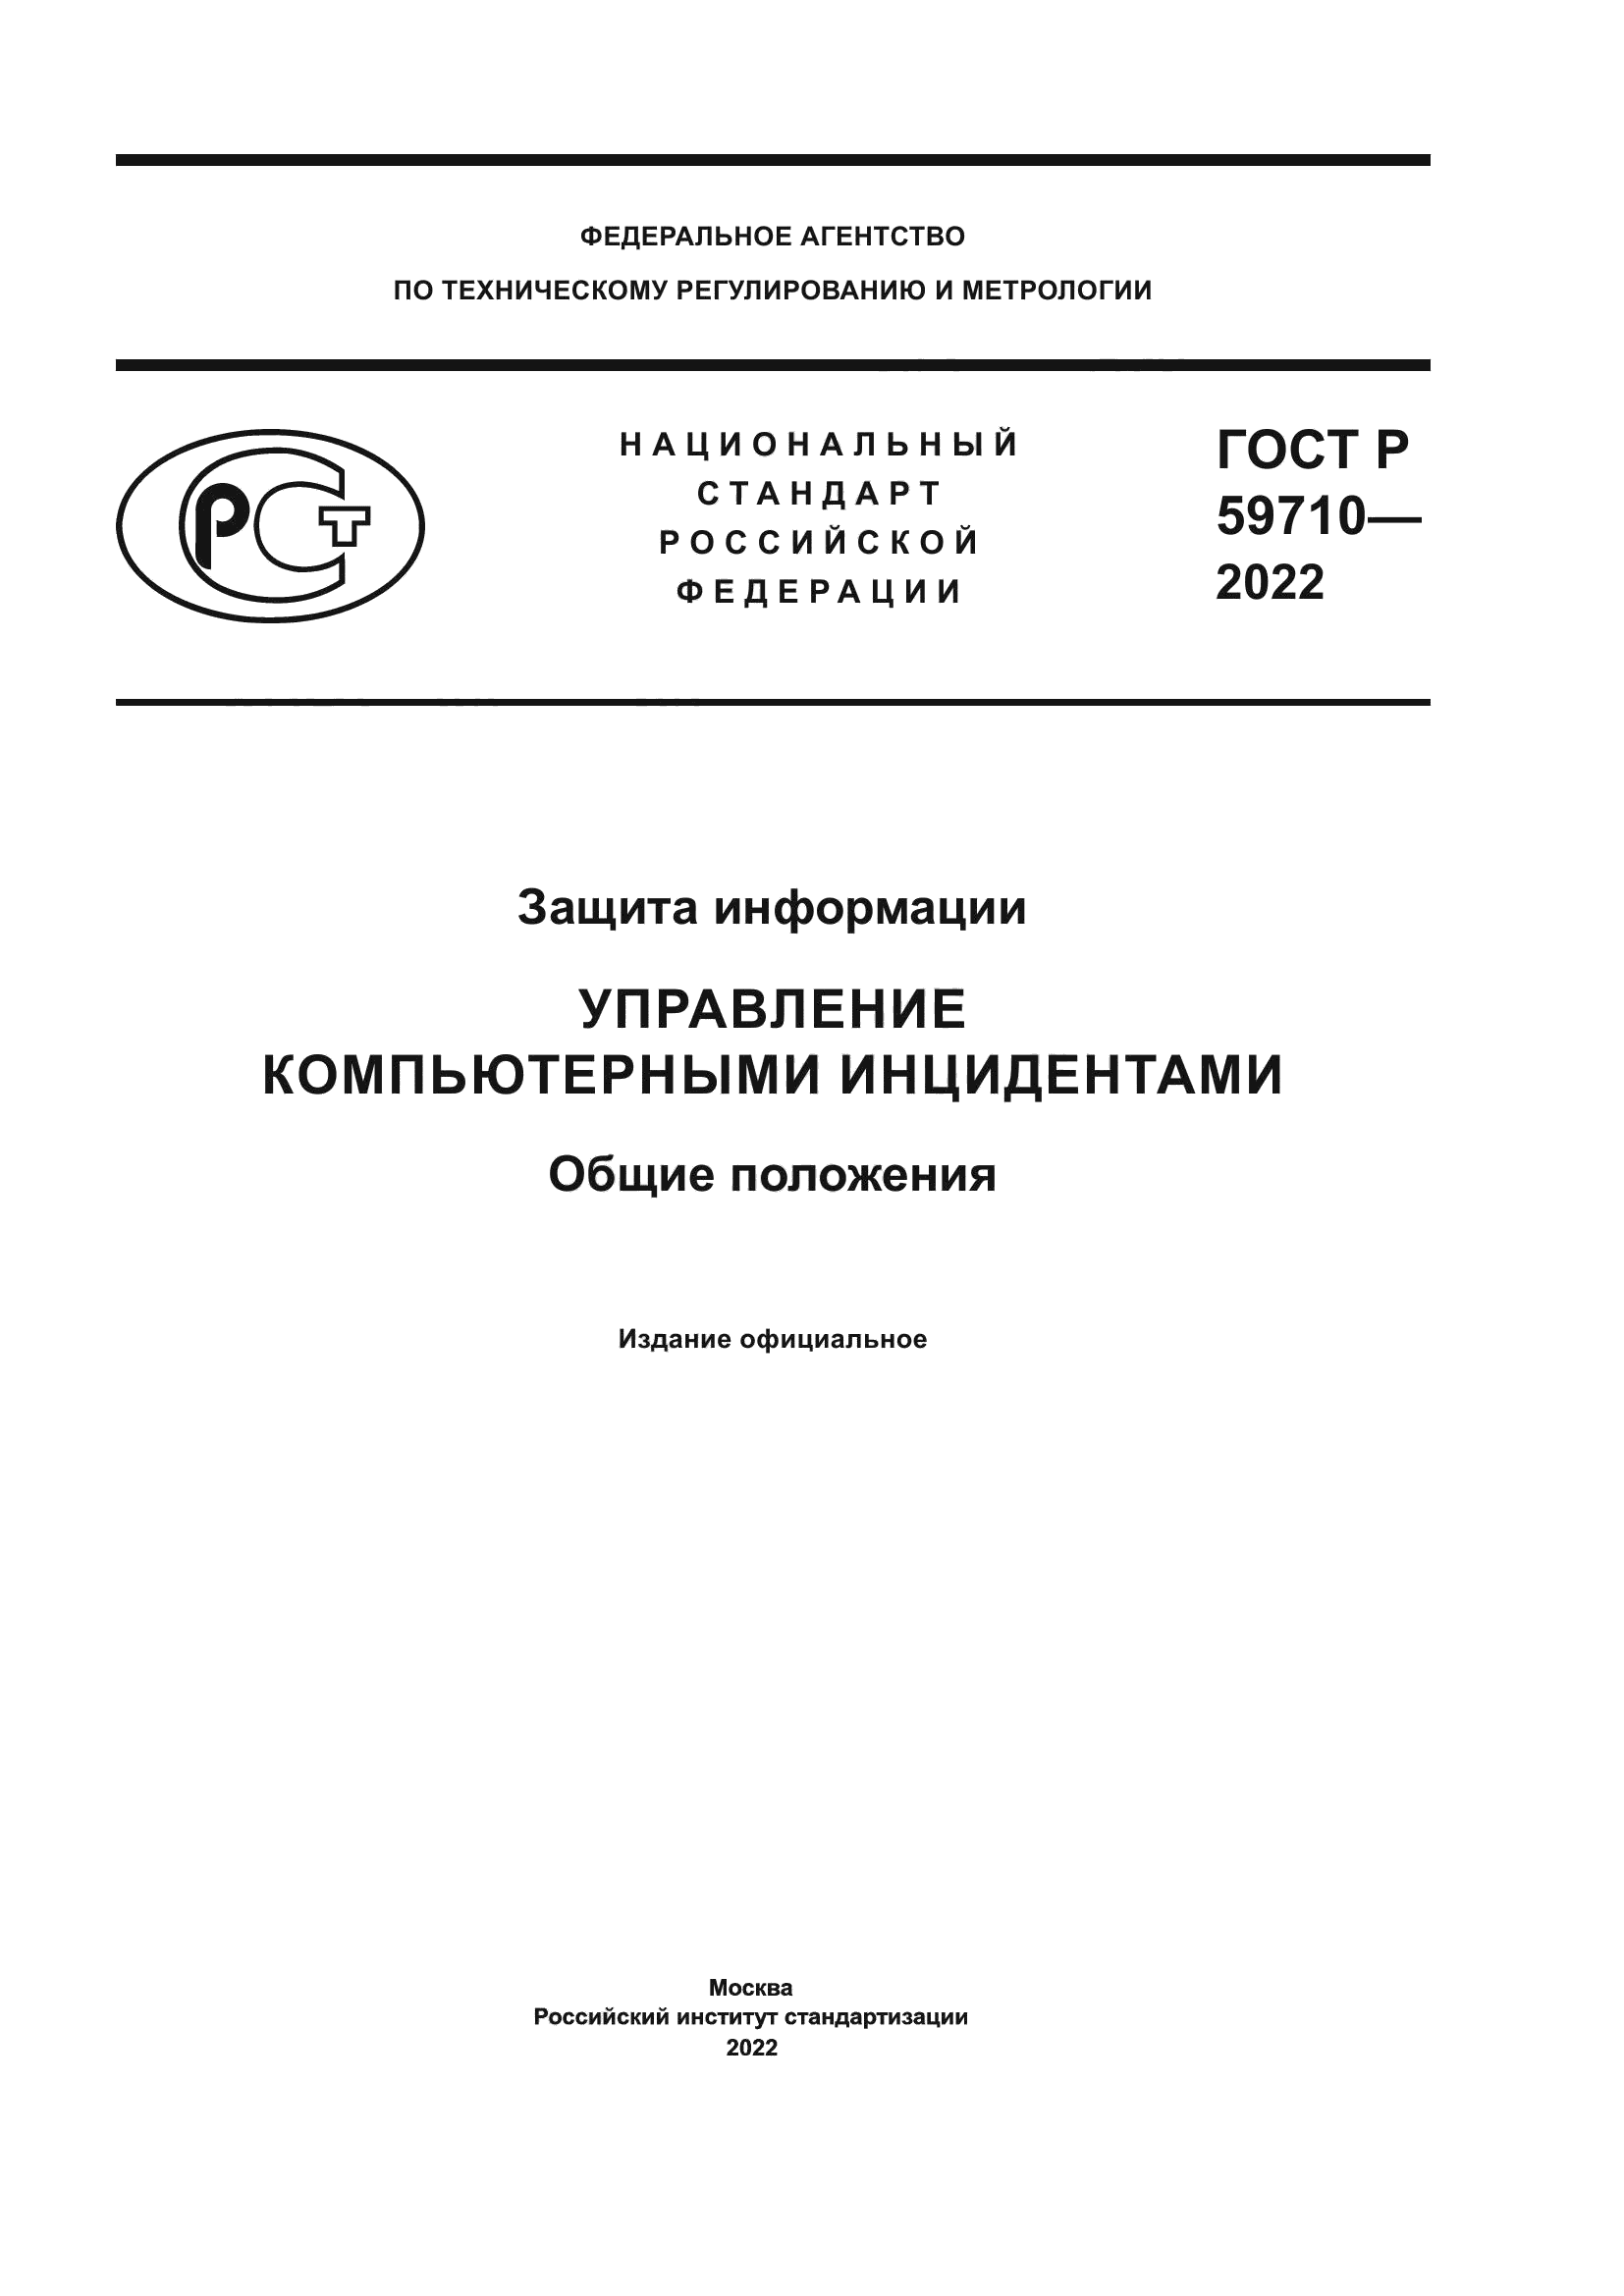 ГОСТ Р 59710-2022